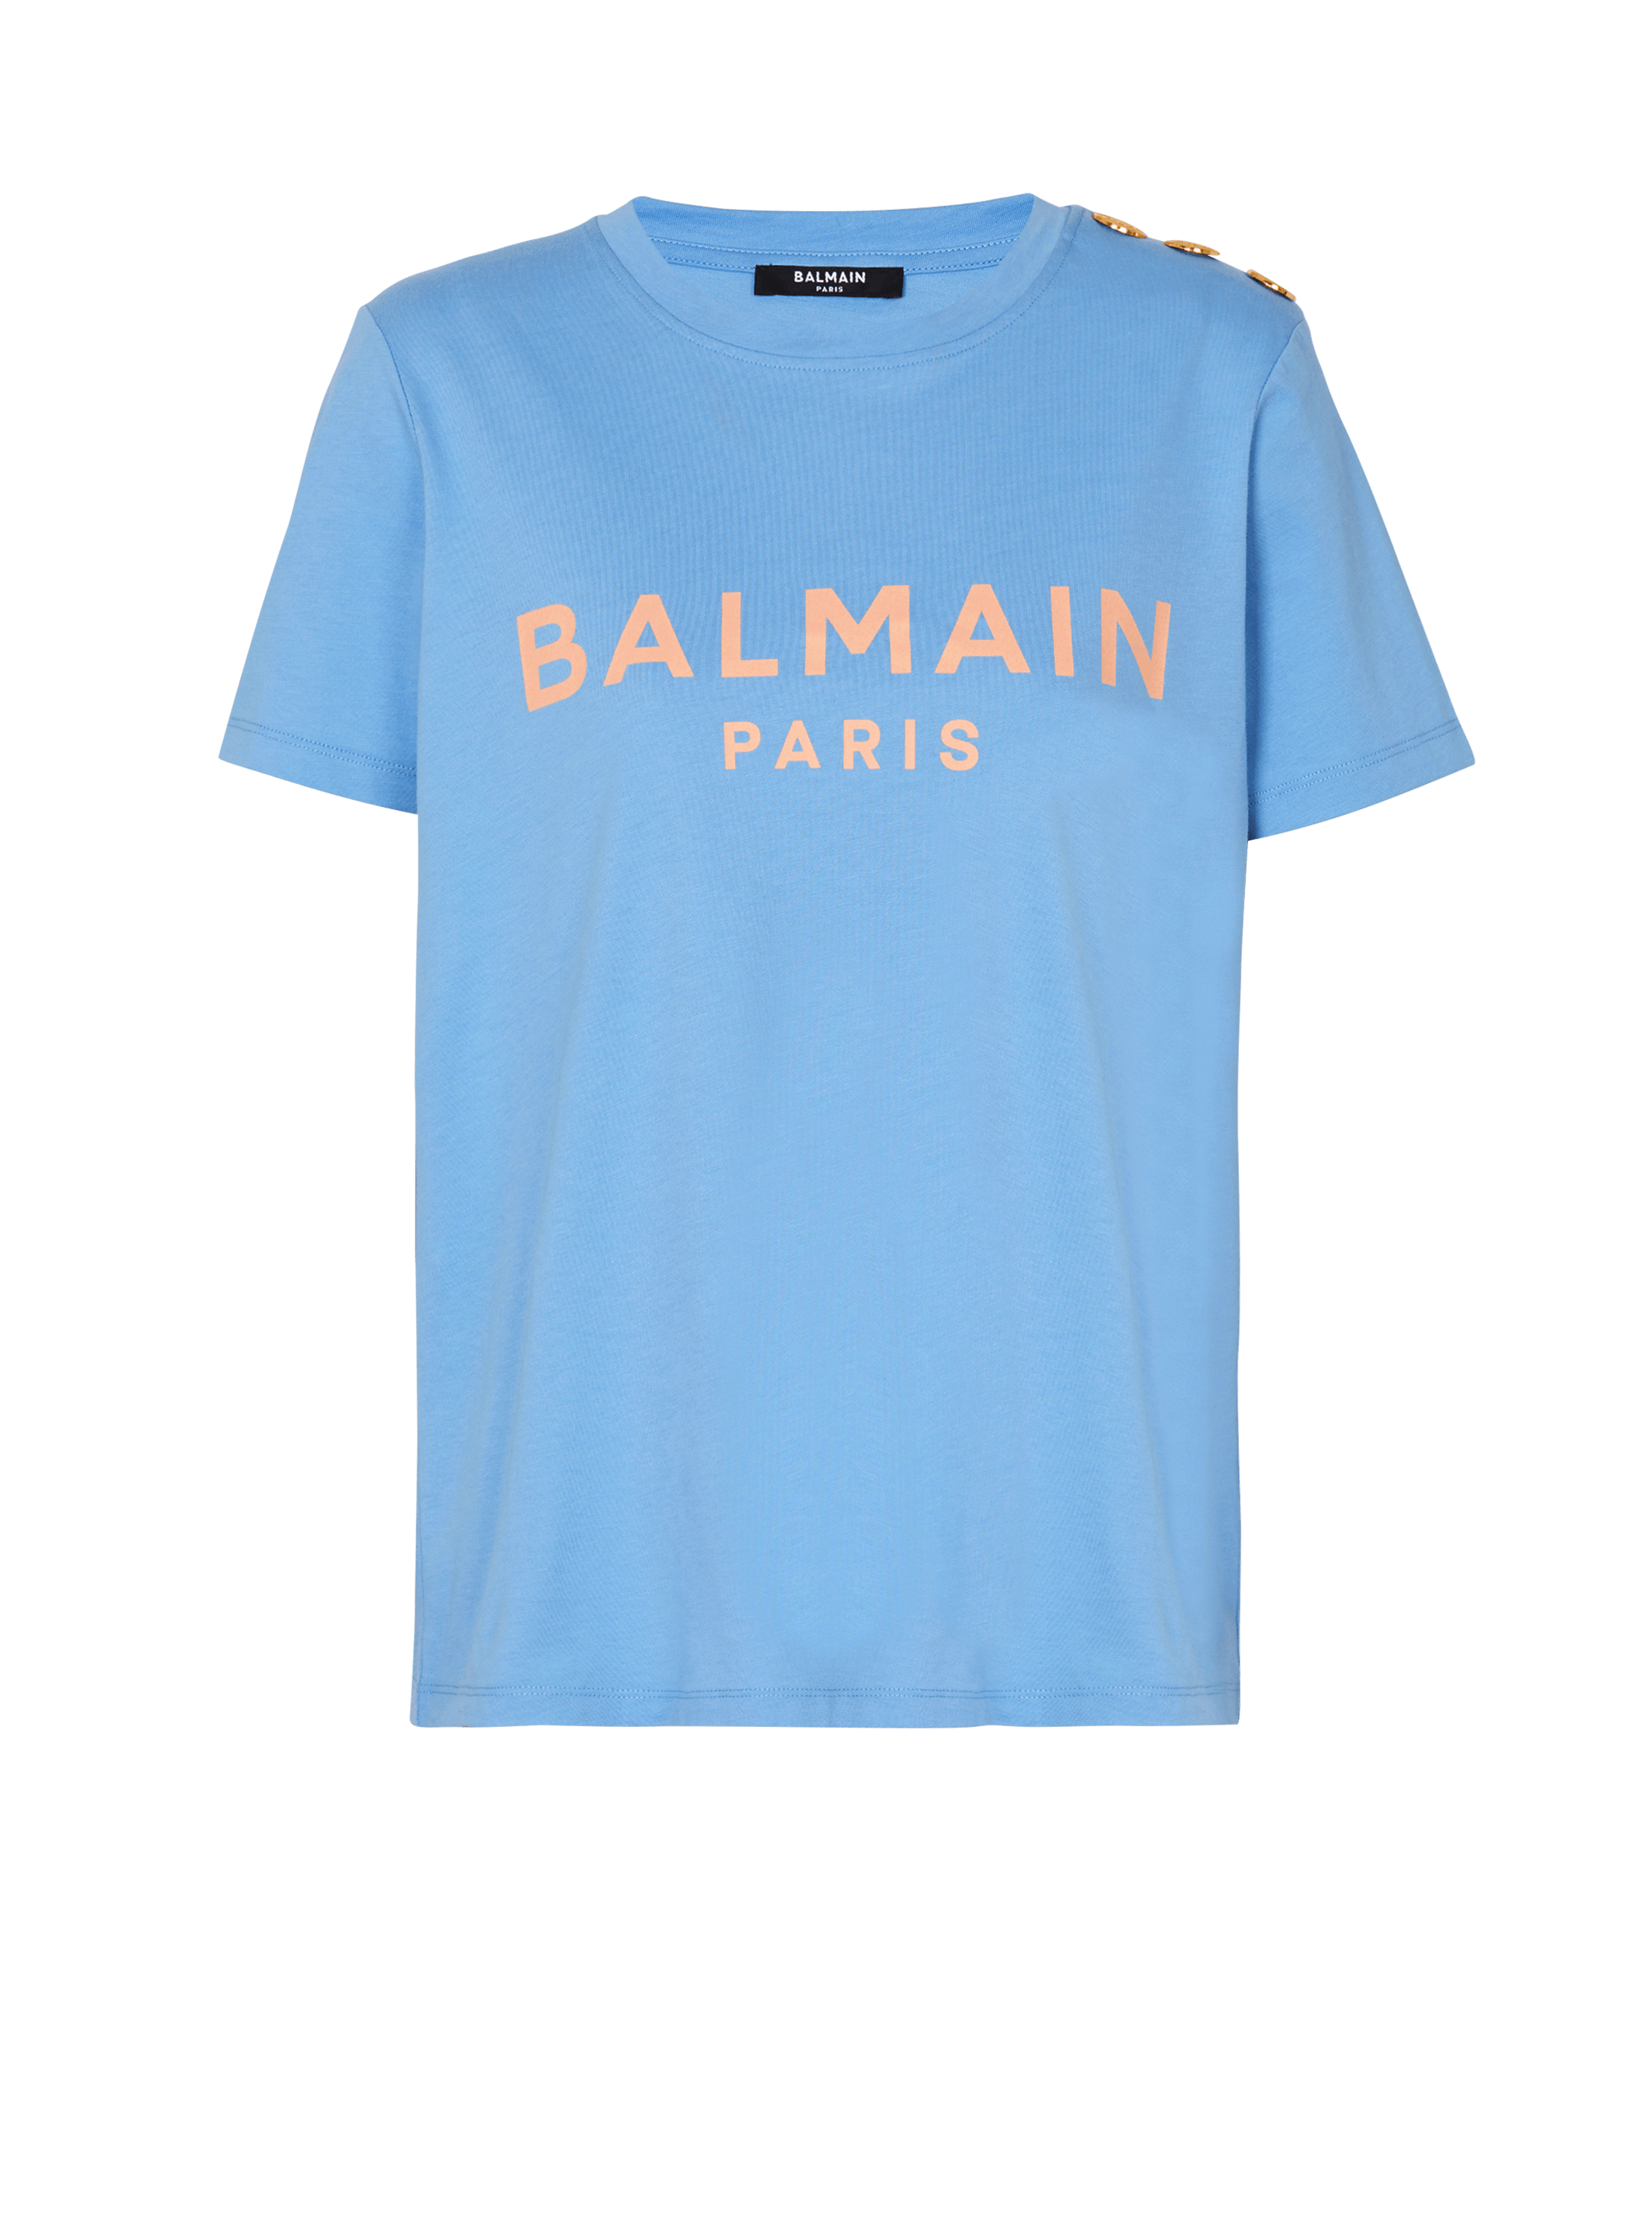 Camiseta con estampado Balmain Paris